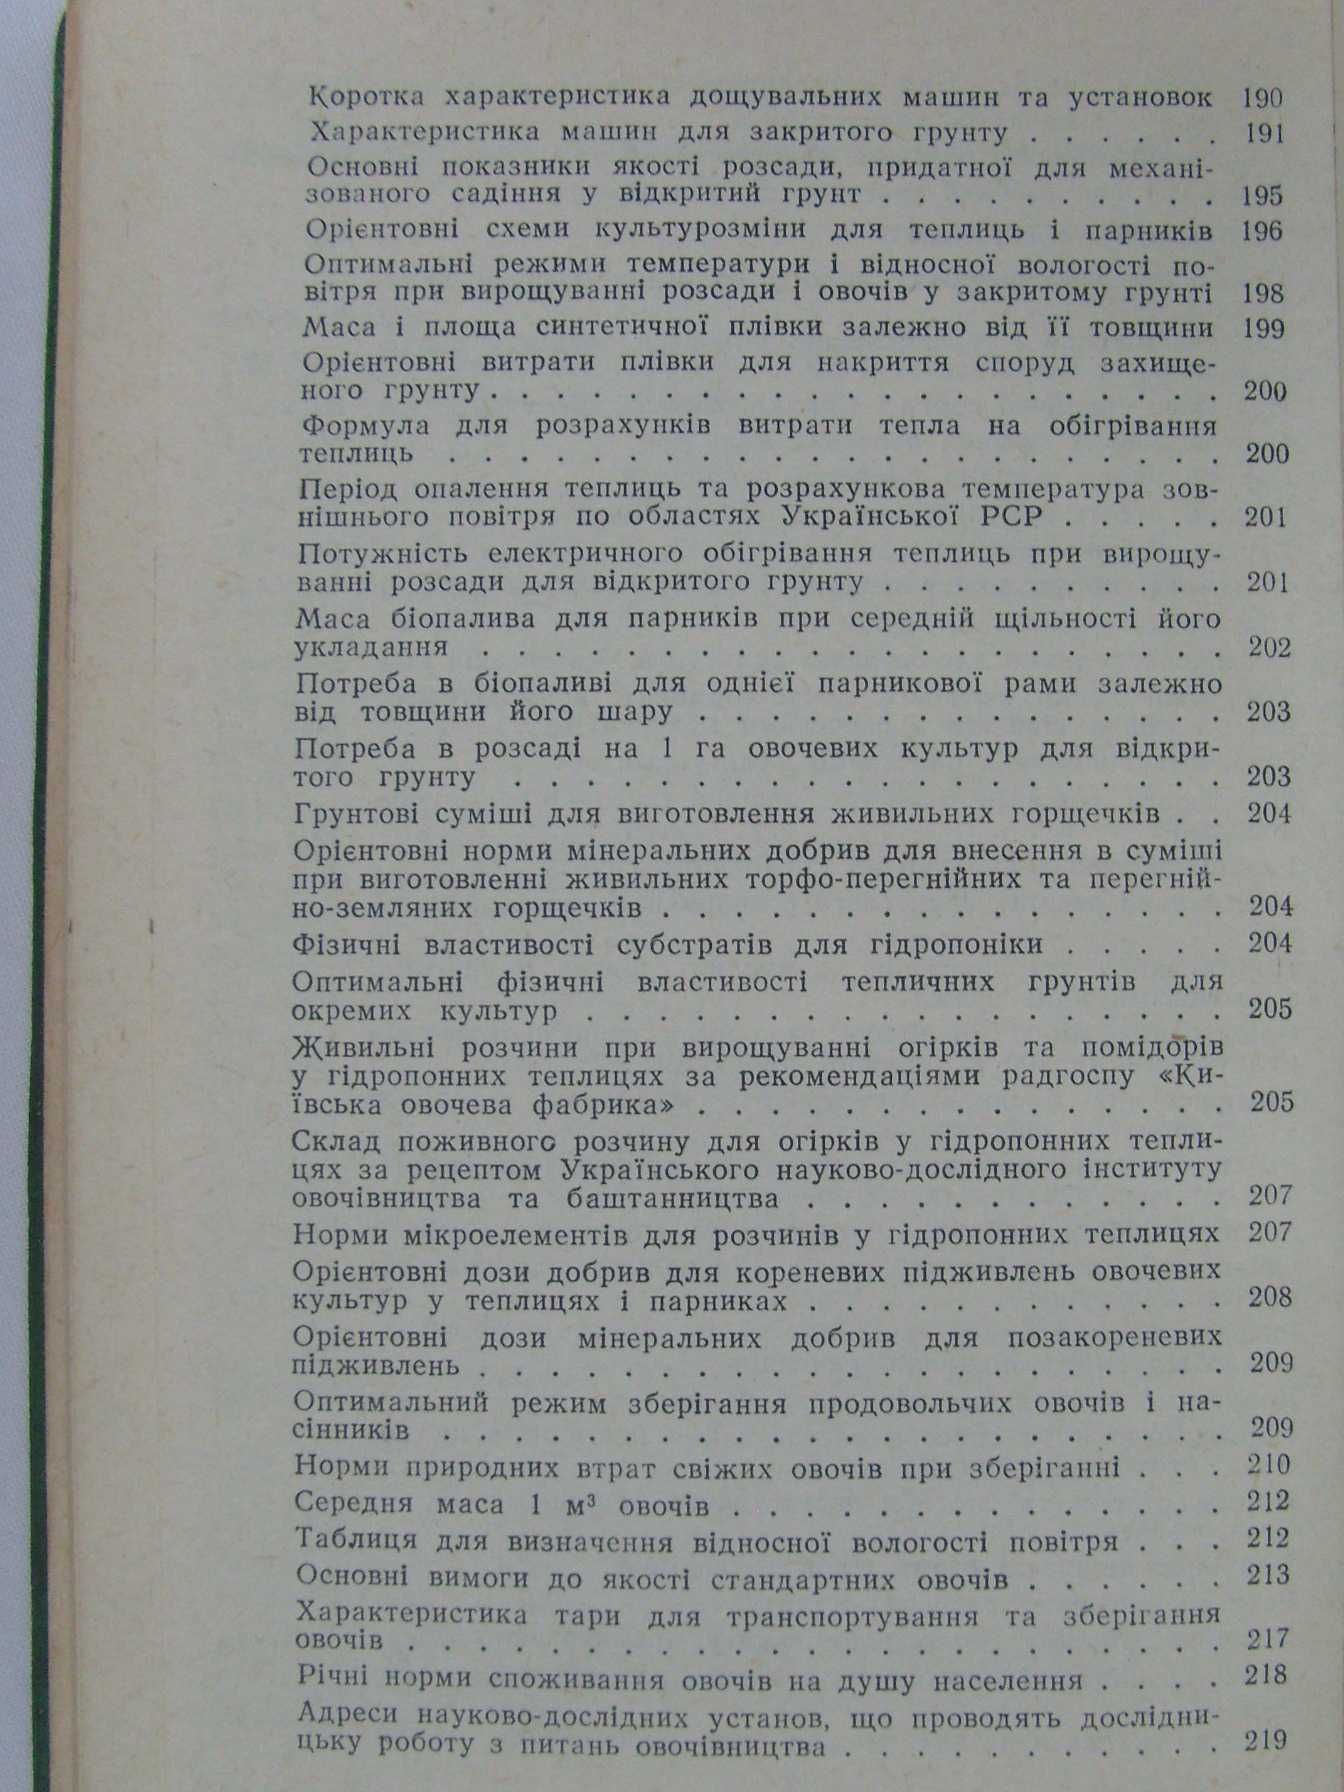 Записна книжка овочівника. 1987 рік..